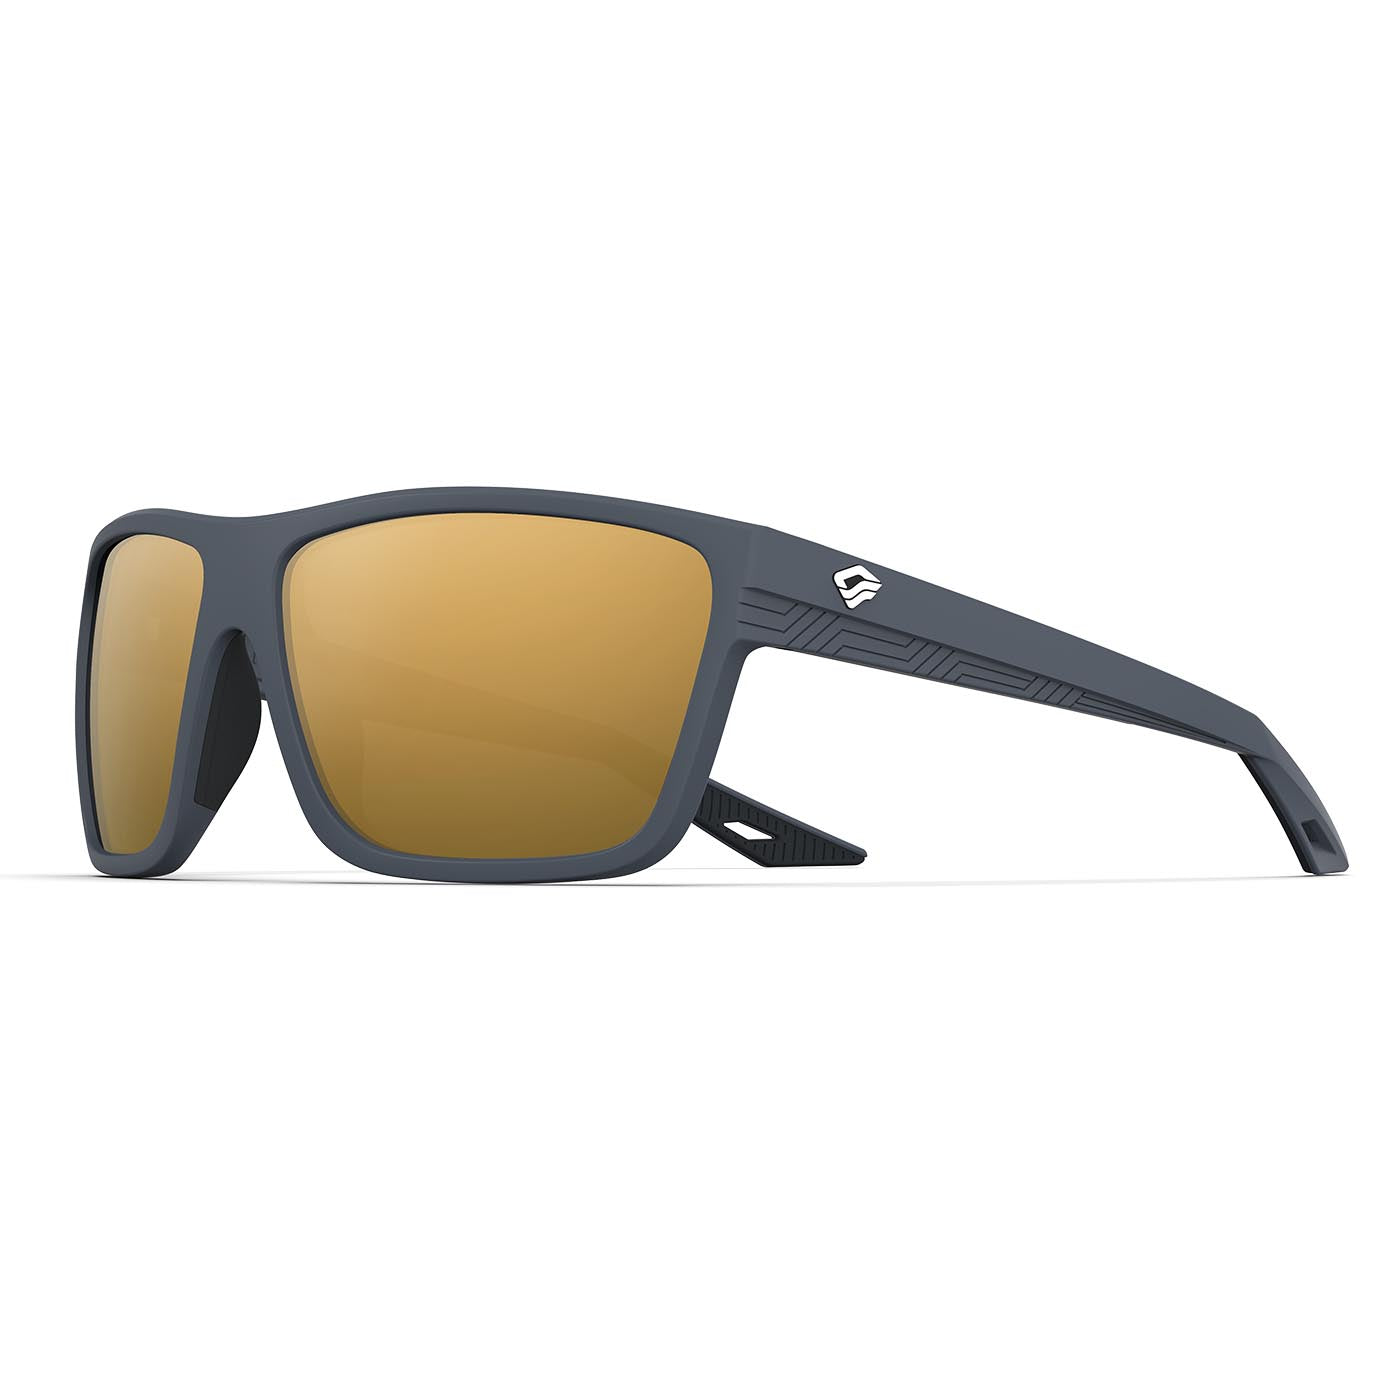 Emerald Smog Polarized Sports Sunglasses for Men & Women